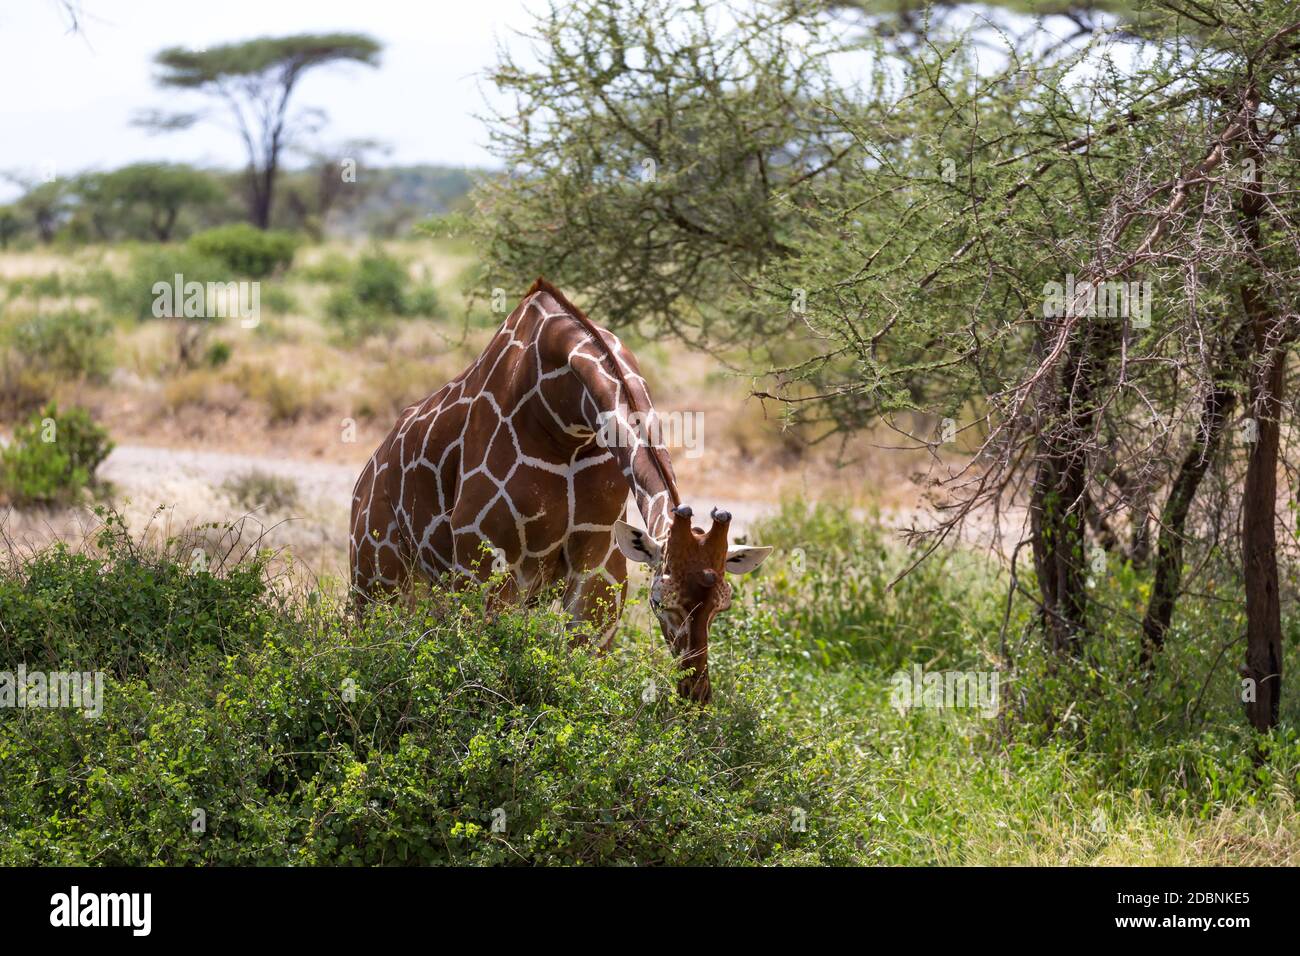 One giraffe eats the leaves of a bush Stock Photo